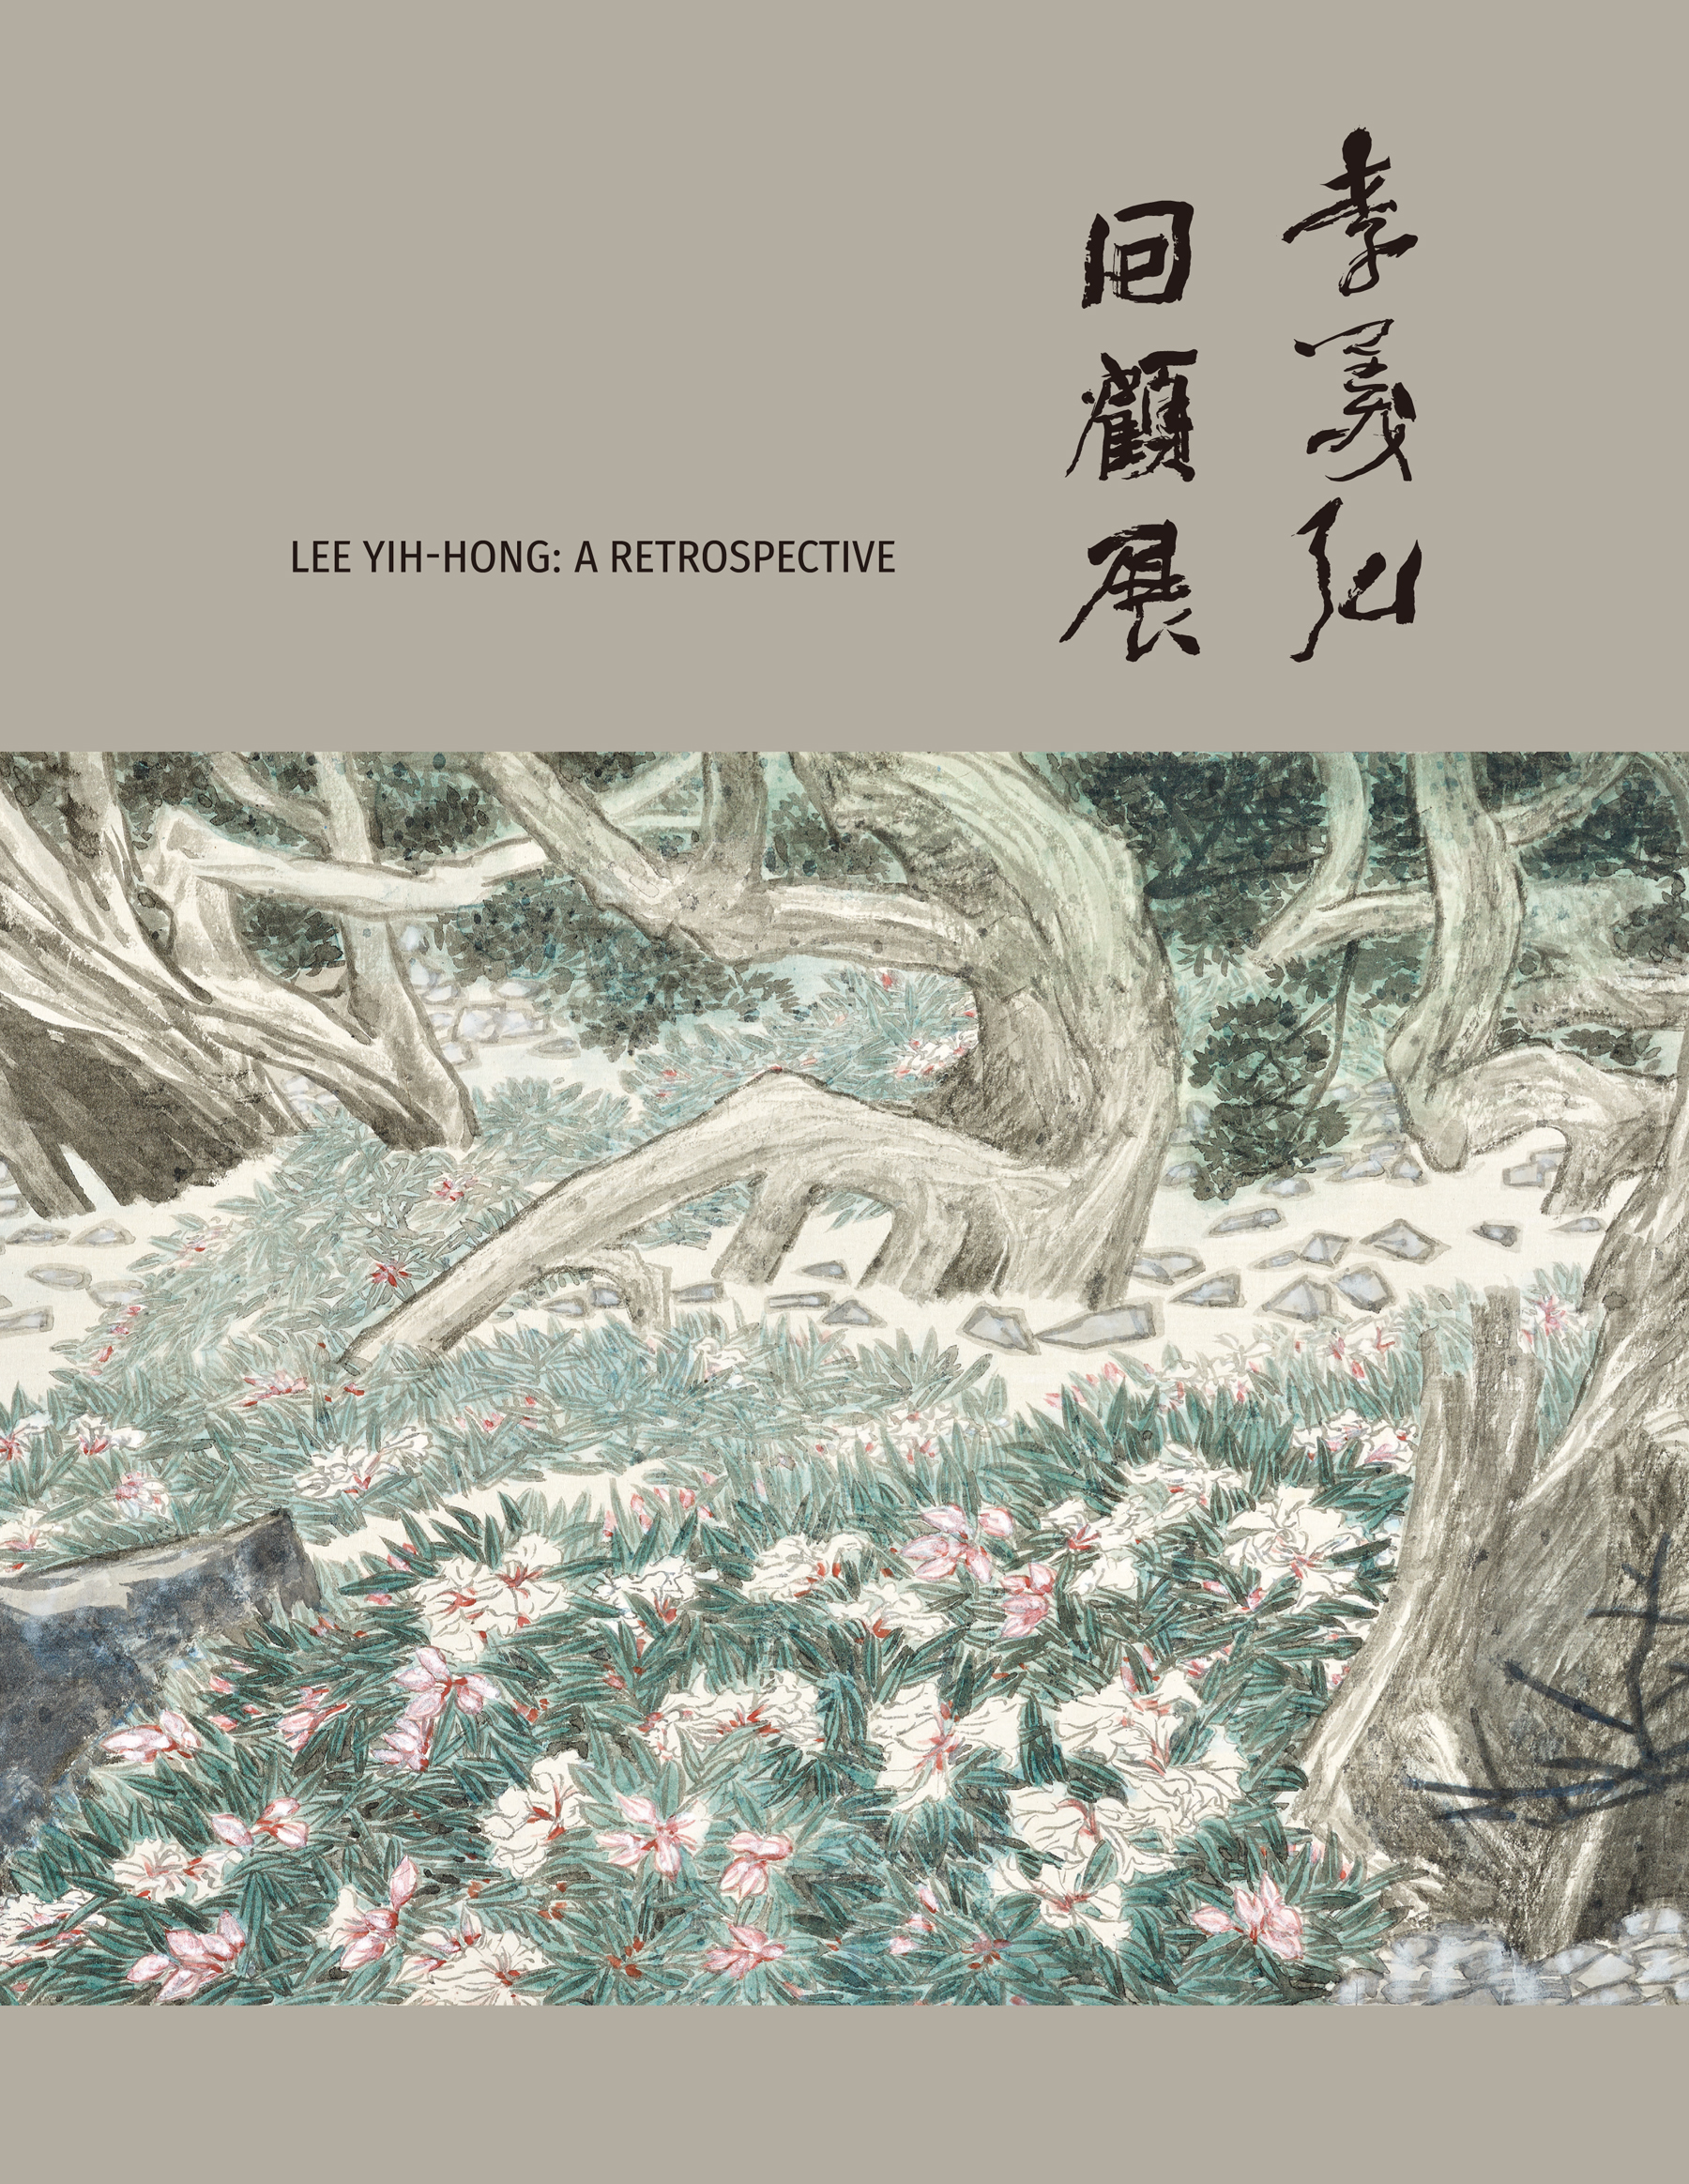 LEE YIH-HONG: A RETROSPECTIVE 的圖說